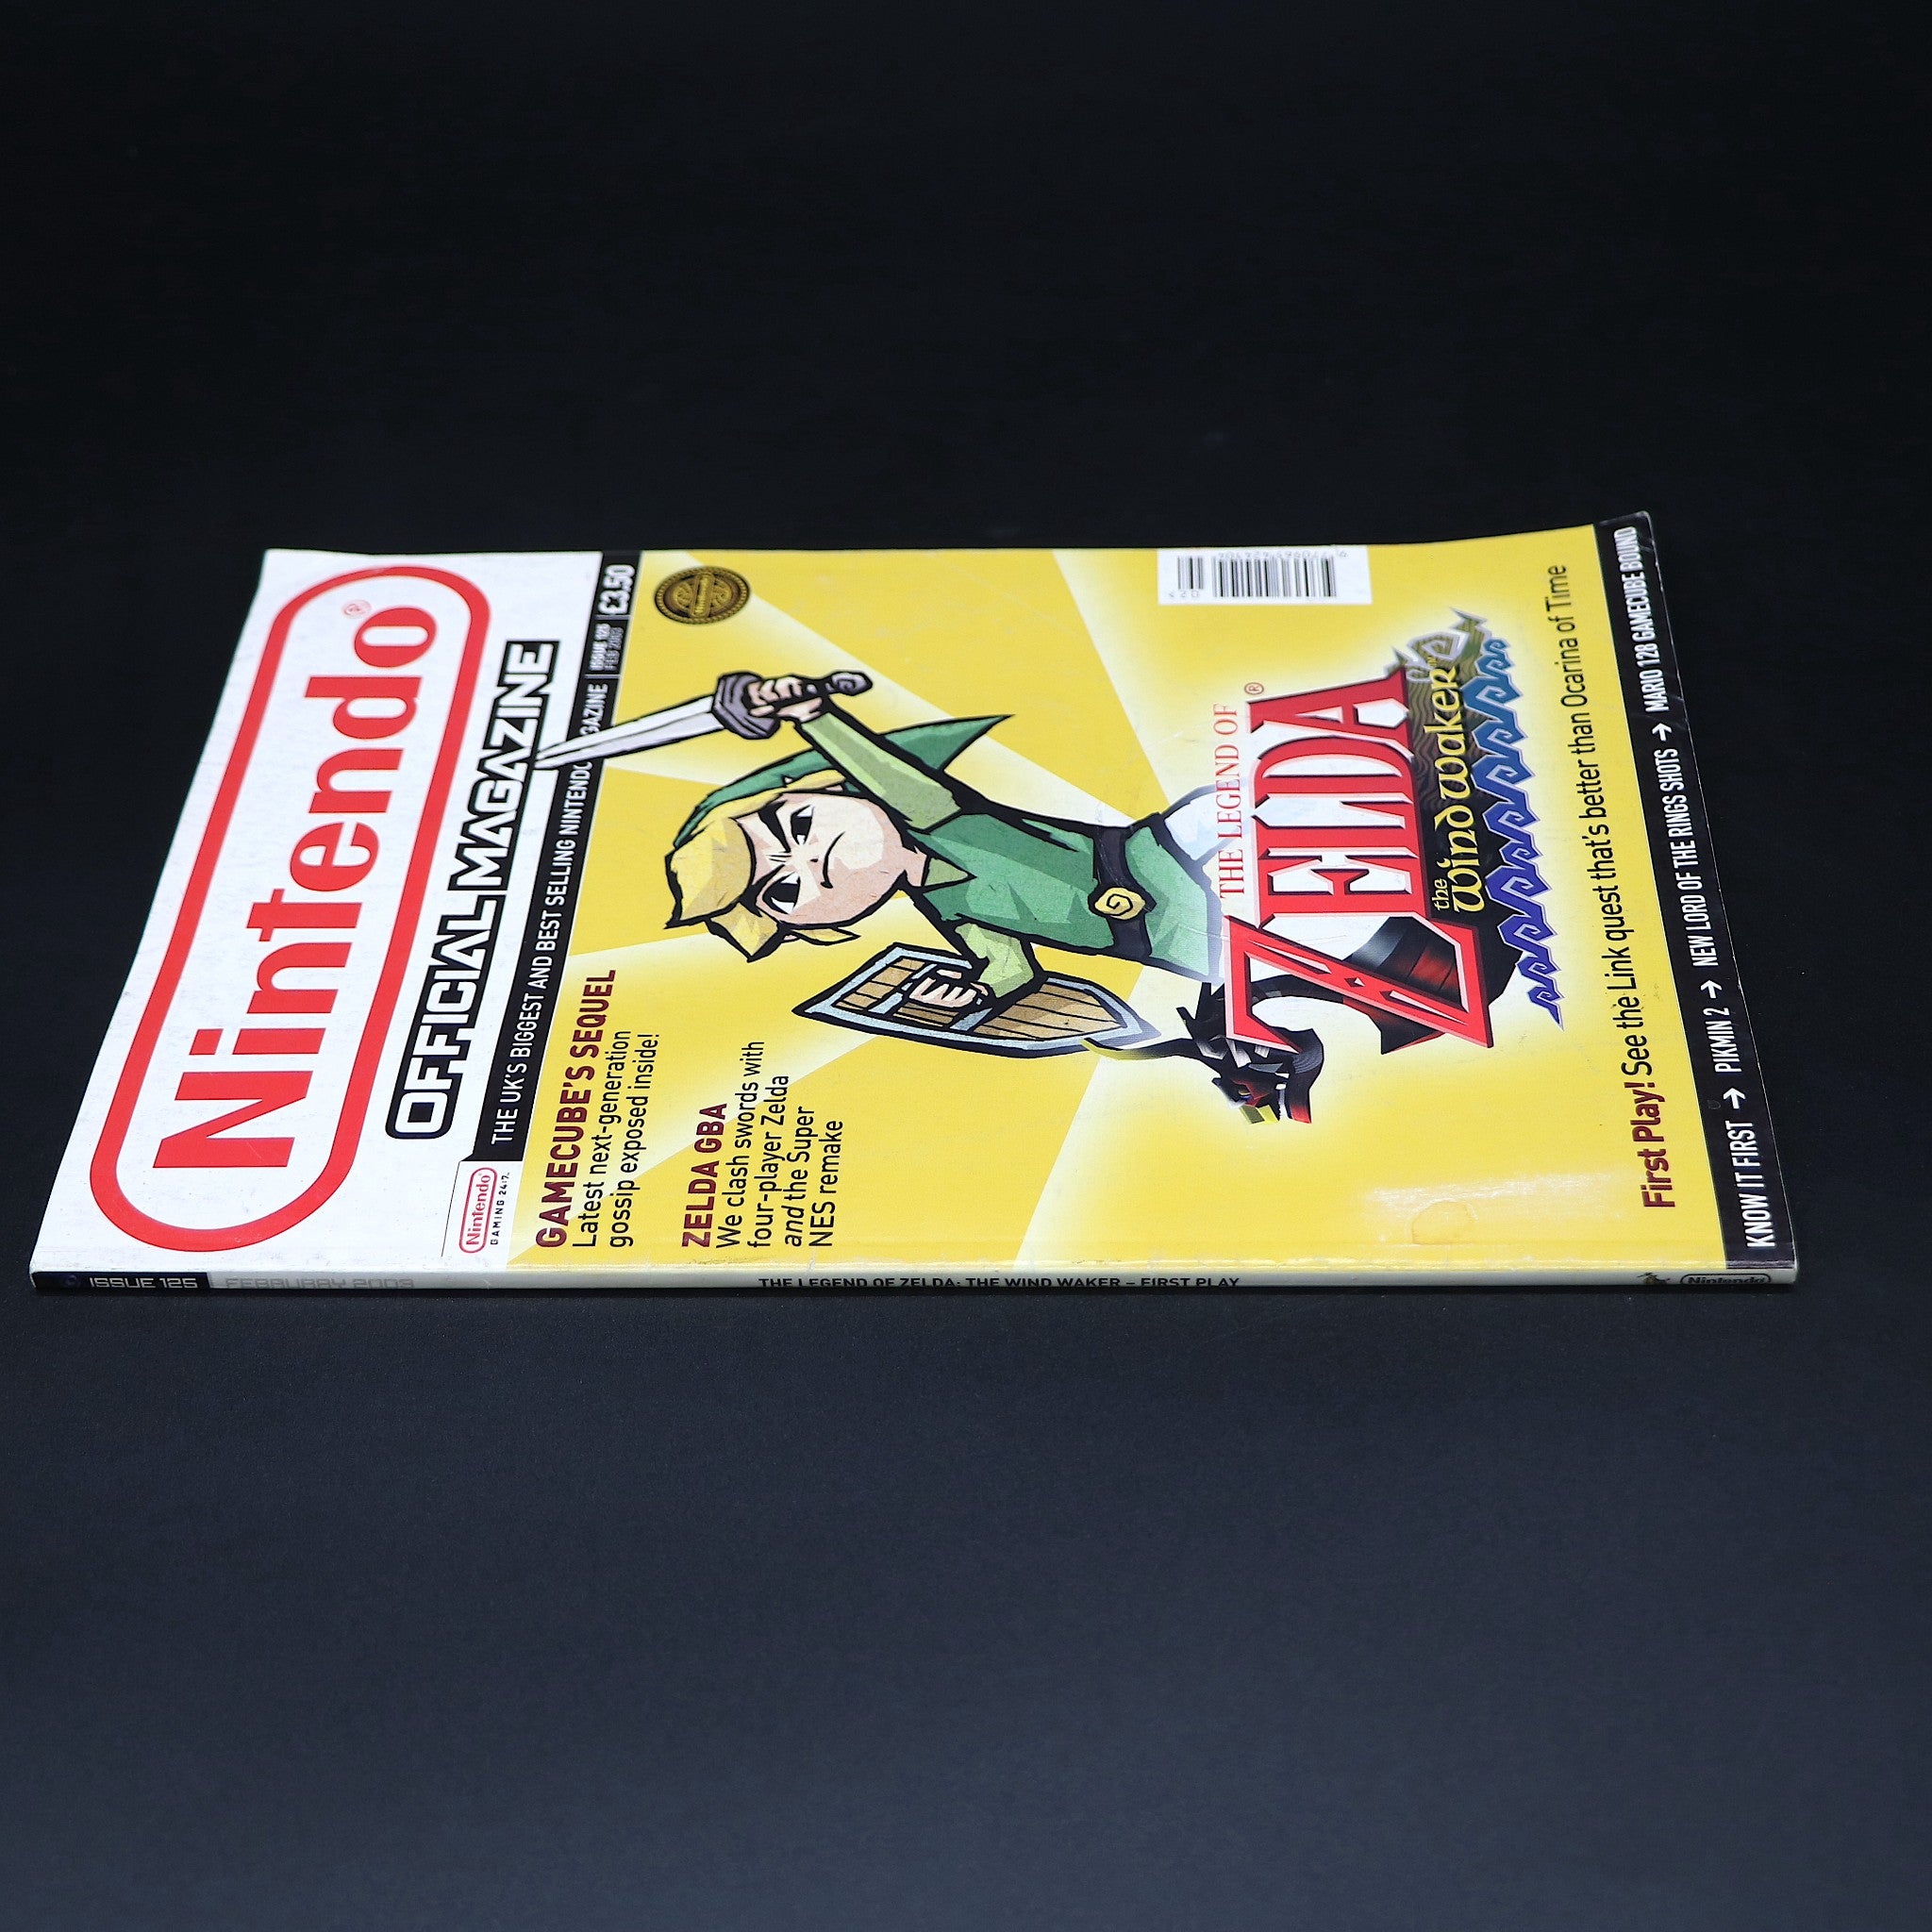 Official Nintendo Magazine NOM UK | Issue 125 Feb 2003 | Zelda The Windwaker